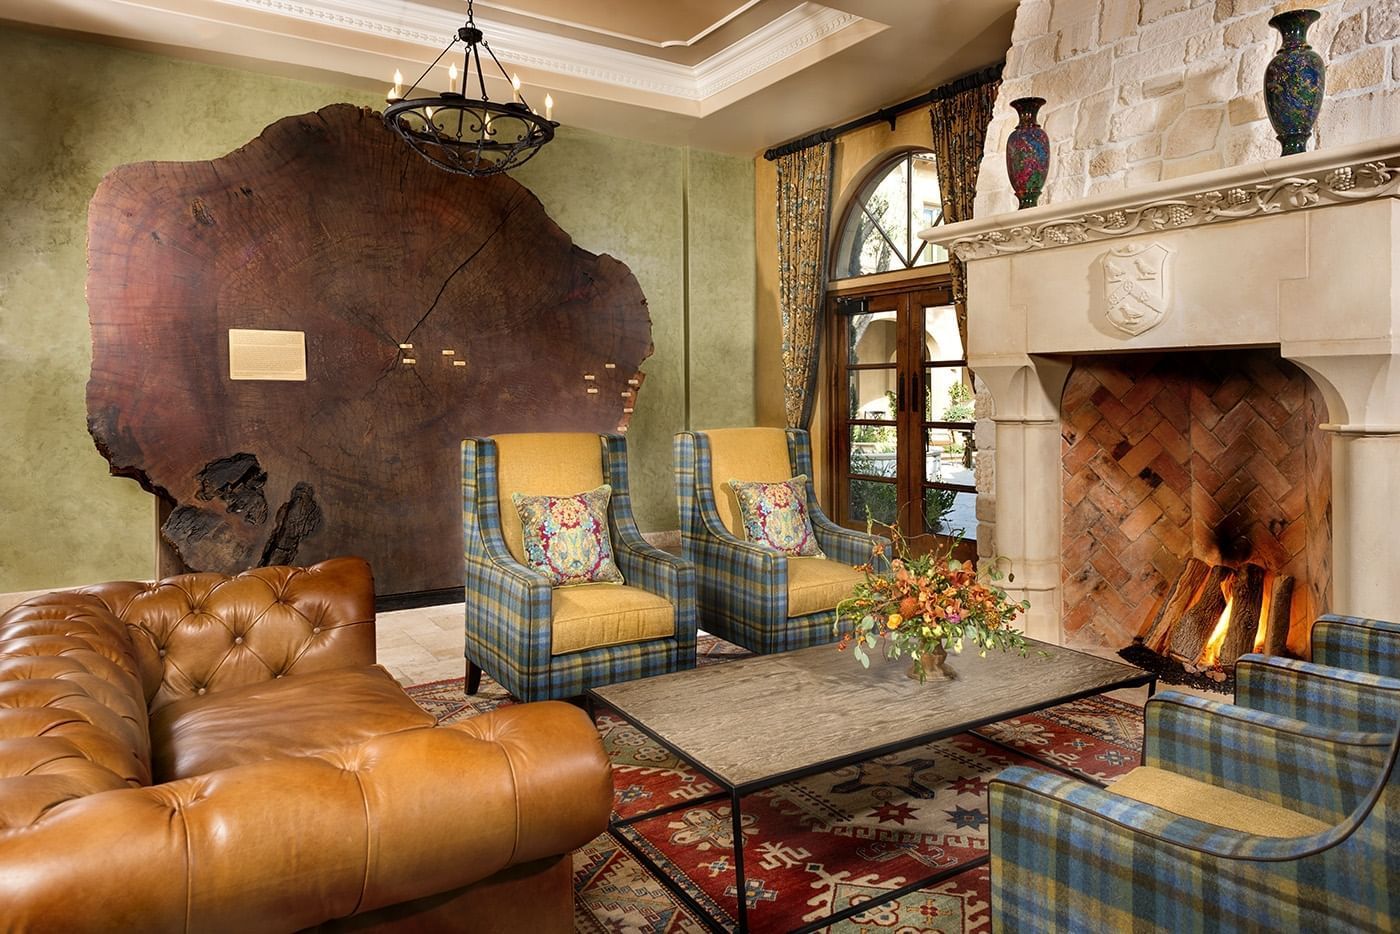 The interior of the Allegretto Vineyard Resort living room style